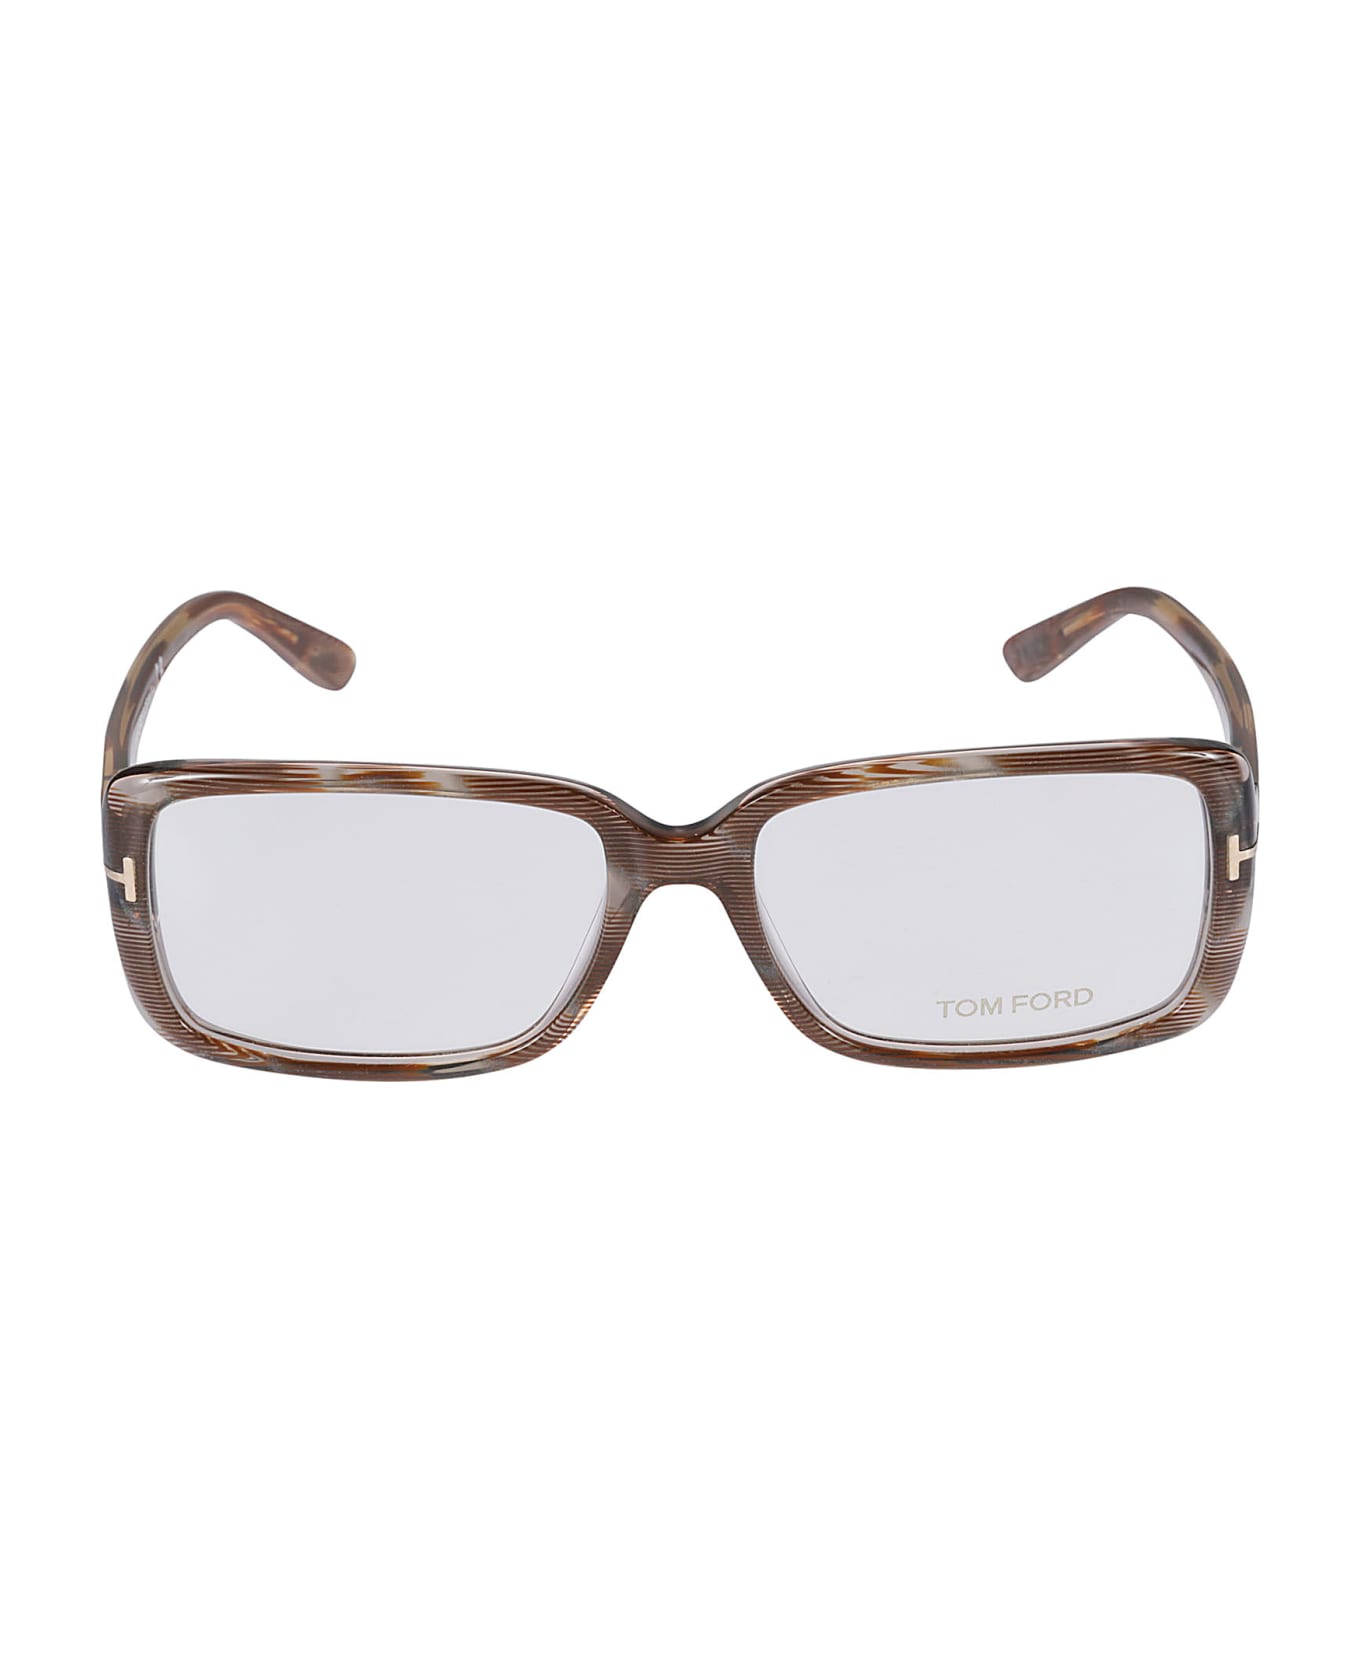 Tom Ford Eyewear Stripe Effect Frame Glasses - 059 アイウェア